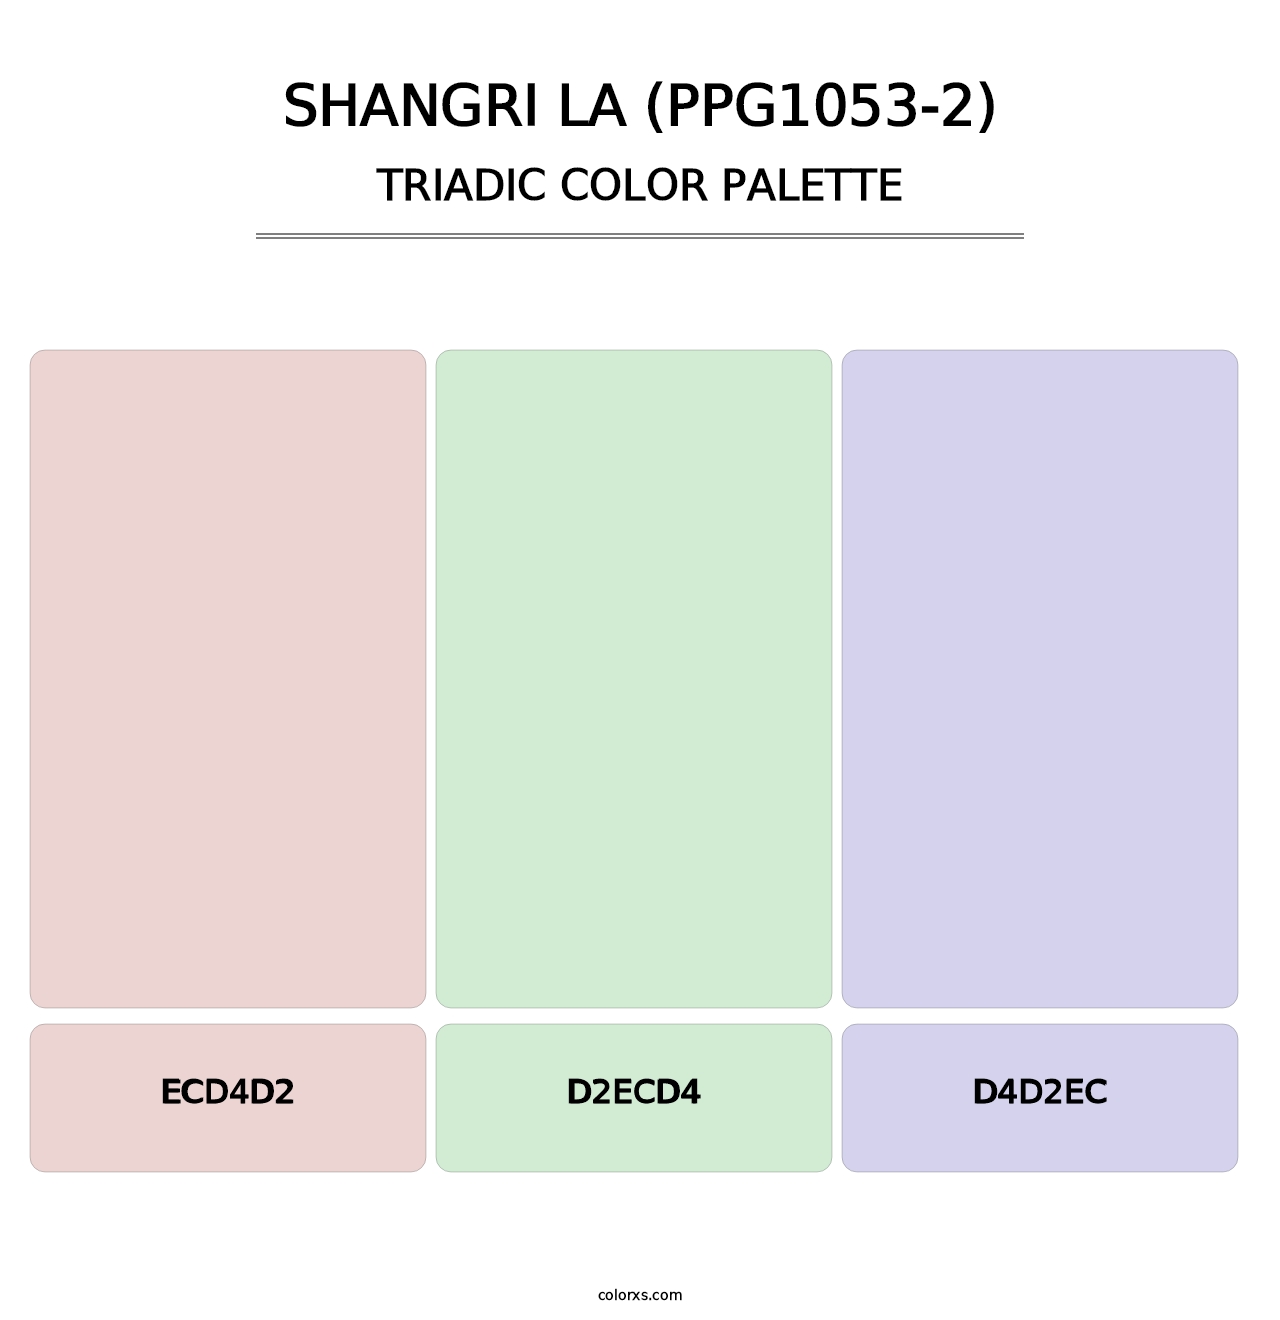 Shangri La (PPG1053-2) - Triadic Color Palette